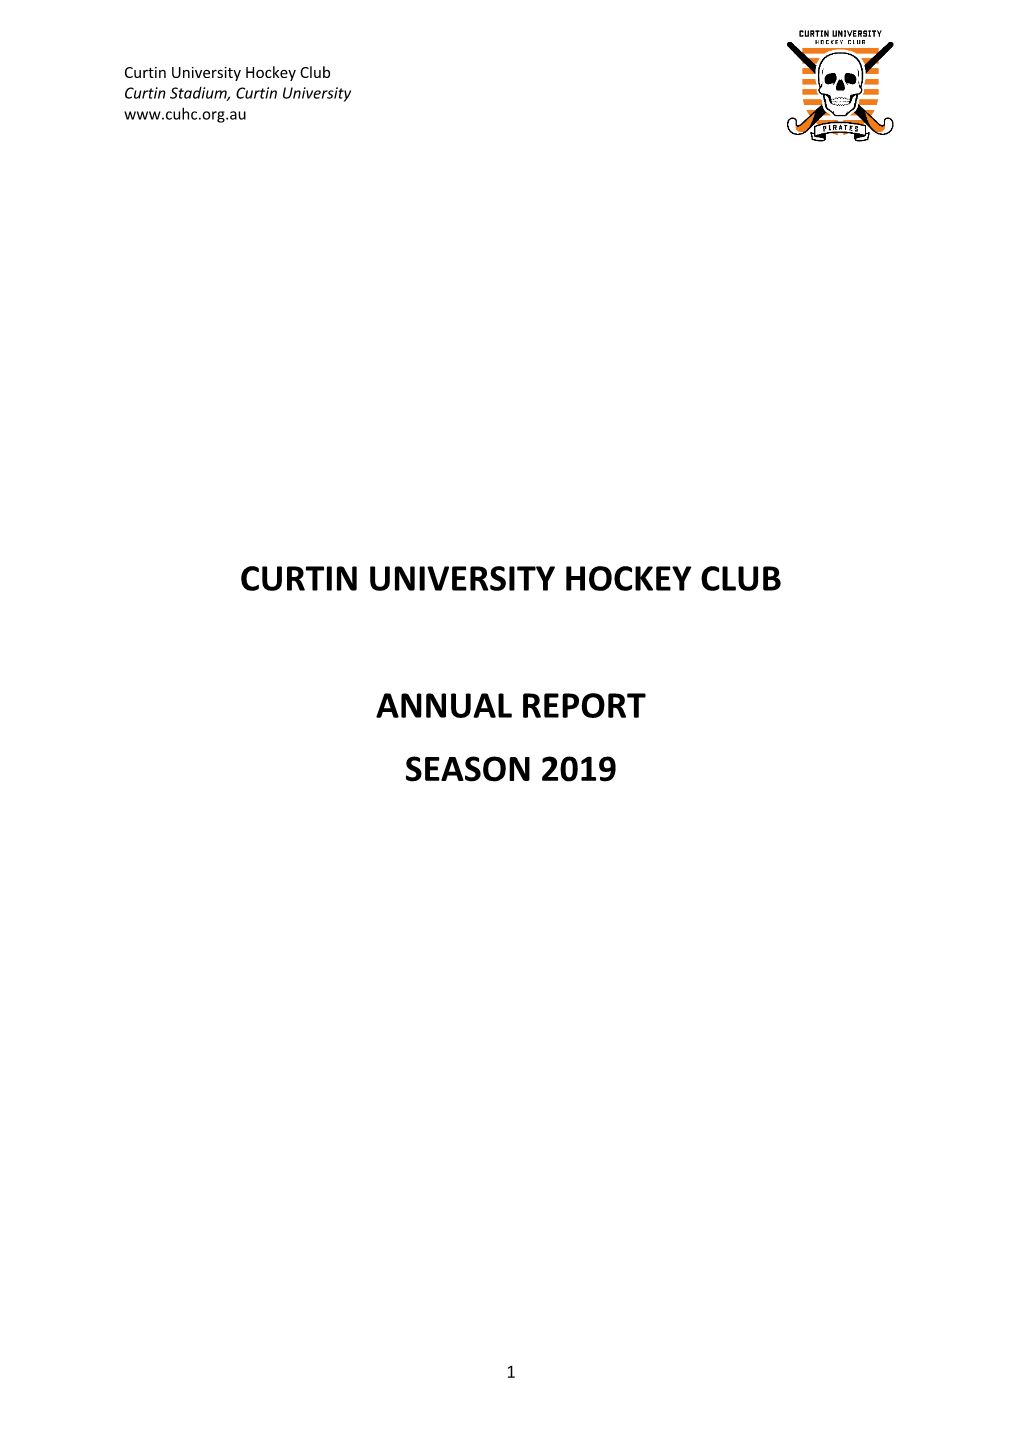 CUHC – Annual Report – Season 2019